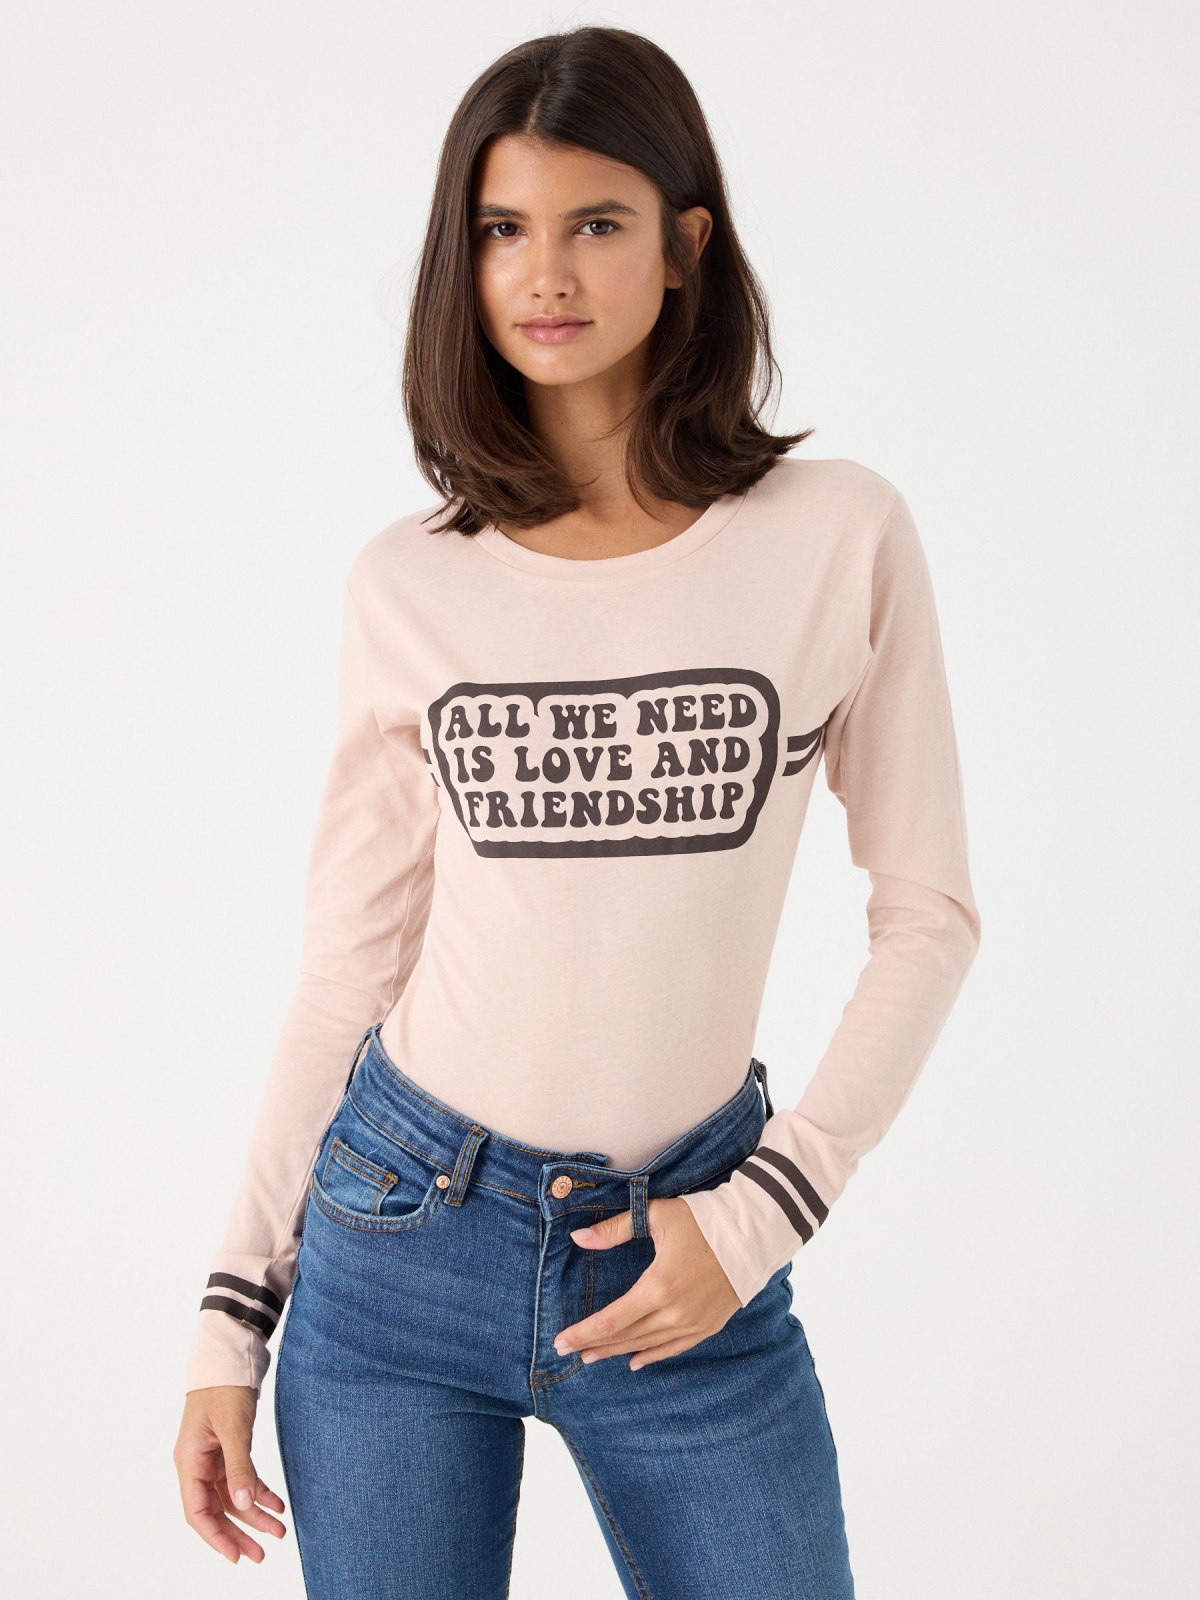 Camiseta manga larga mensaje rosa claro vista media frontal